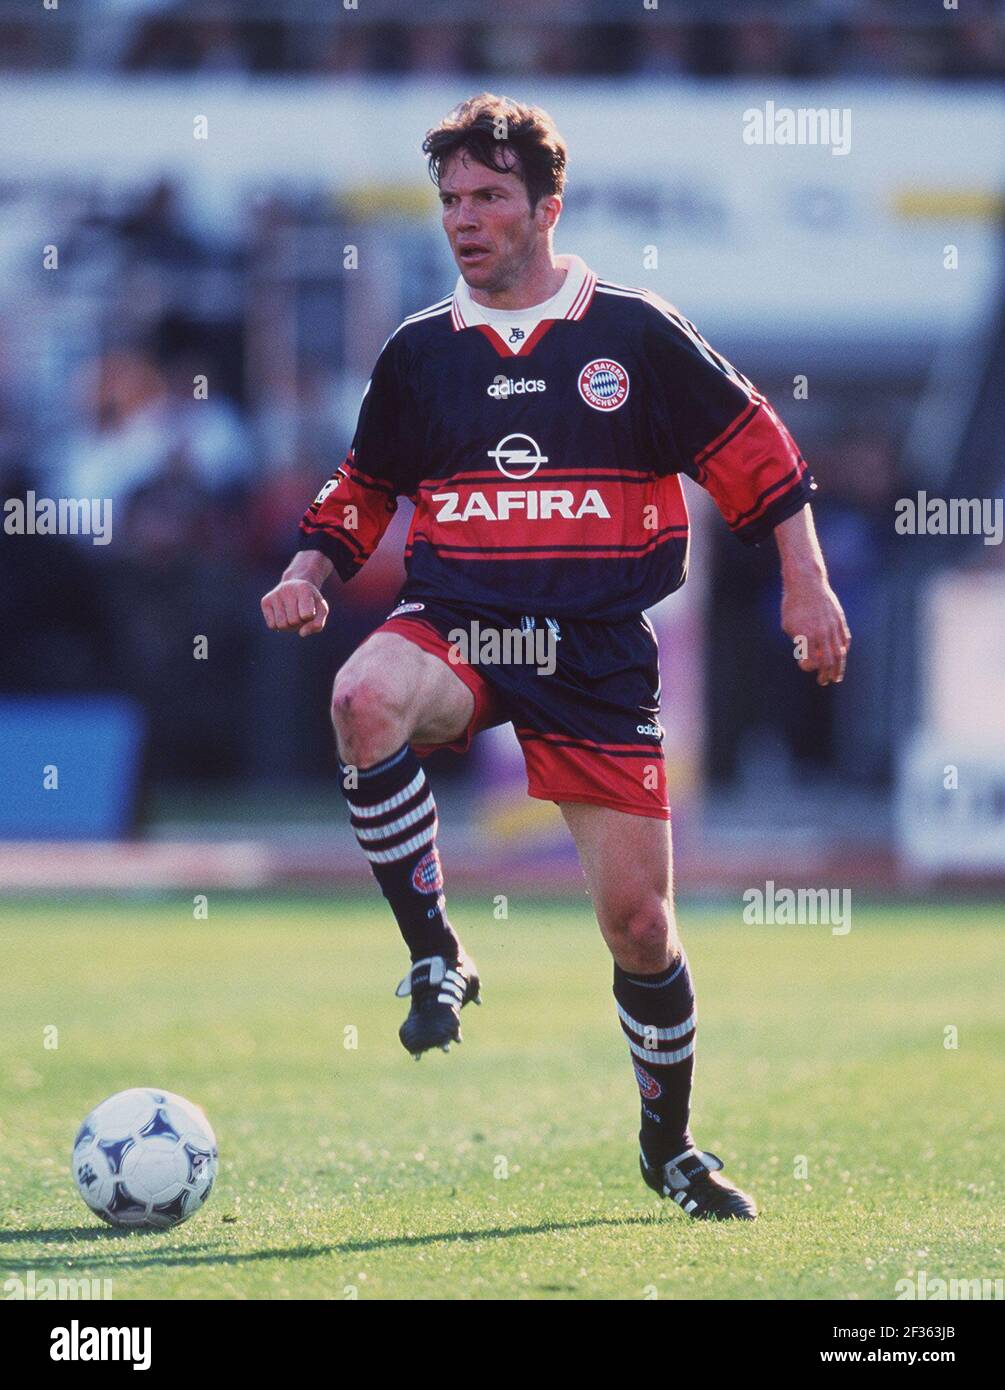 Lothar Matthaeus will celebrate his 60th birthday on March 21, 2021.  Archive photo: Soccer, Lothar MATTHAEUS, FC Bayern Munich, action, HF,  09.05.1999, Â | usage worldwide Stock Photo - Alamy